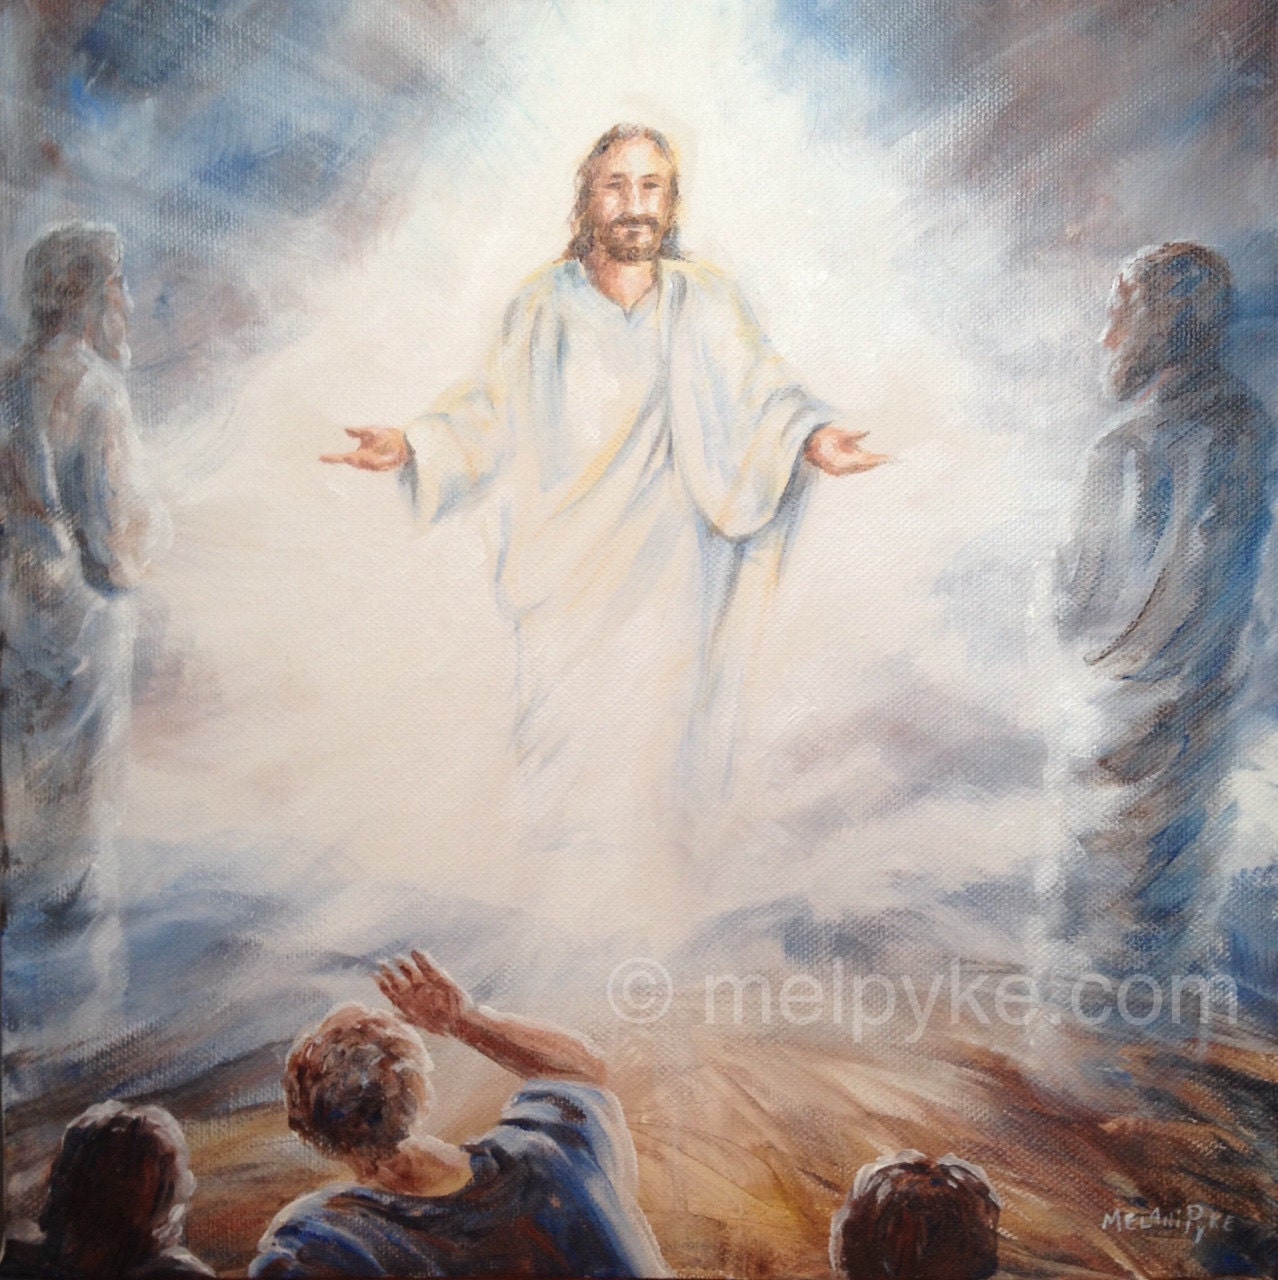 Jesus Transfiguration Images